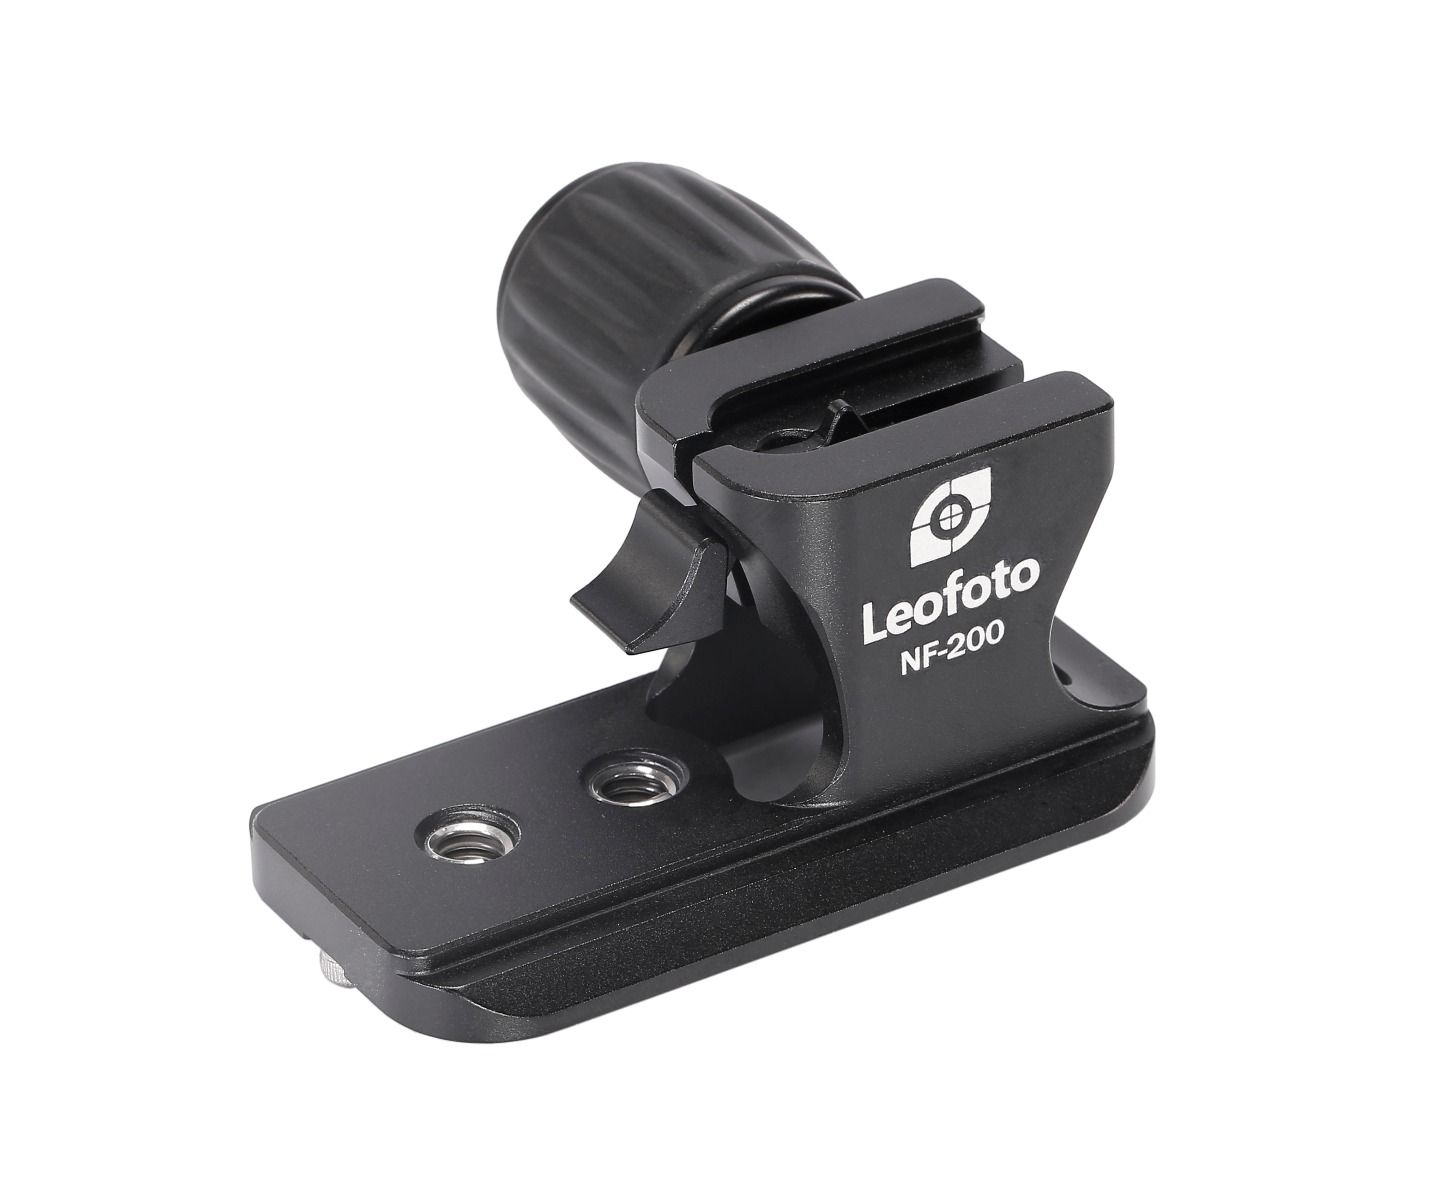 Leofoto NF-200 Lens Foot Compatible for Nikon 70-200mm F/2.8G ED VR II Lens | Arca Compatible